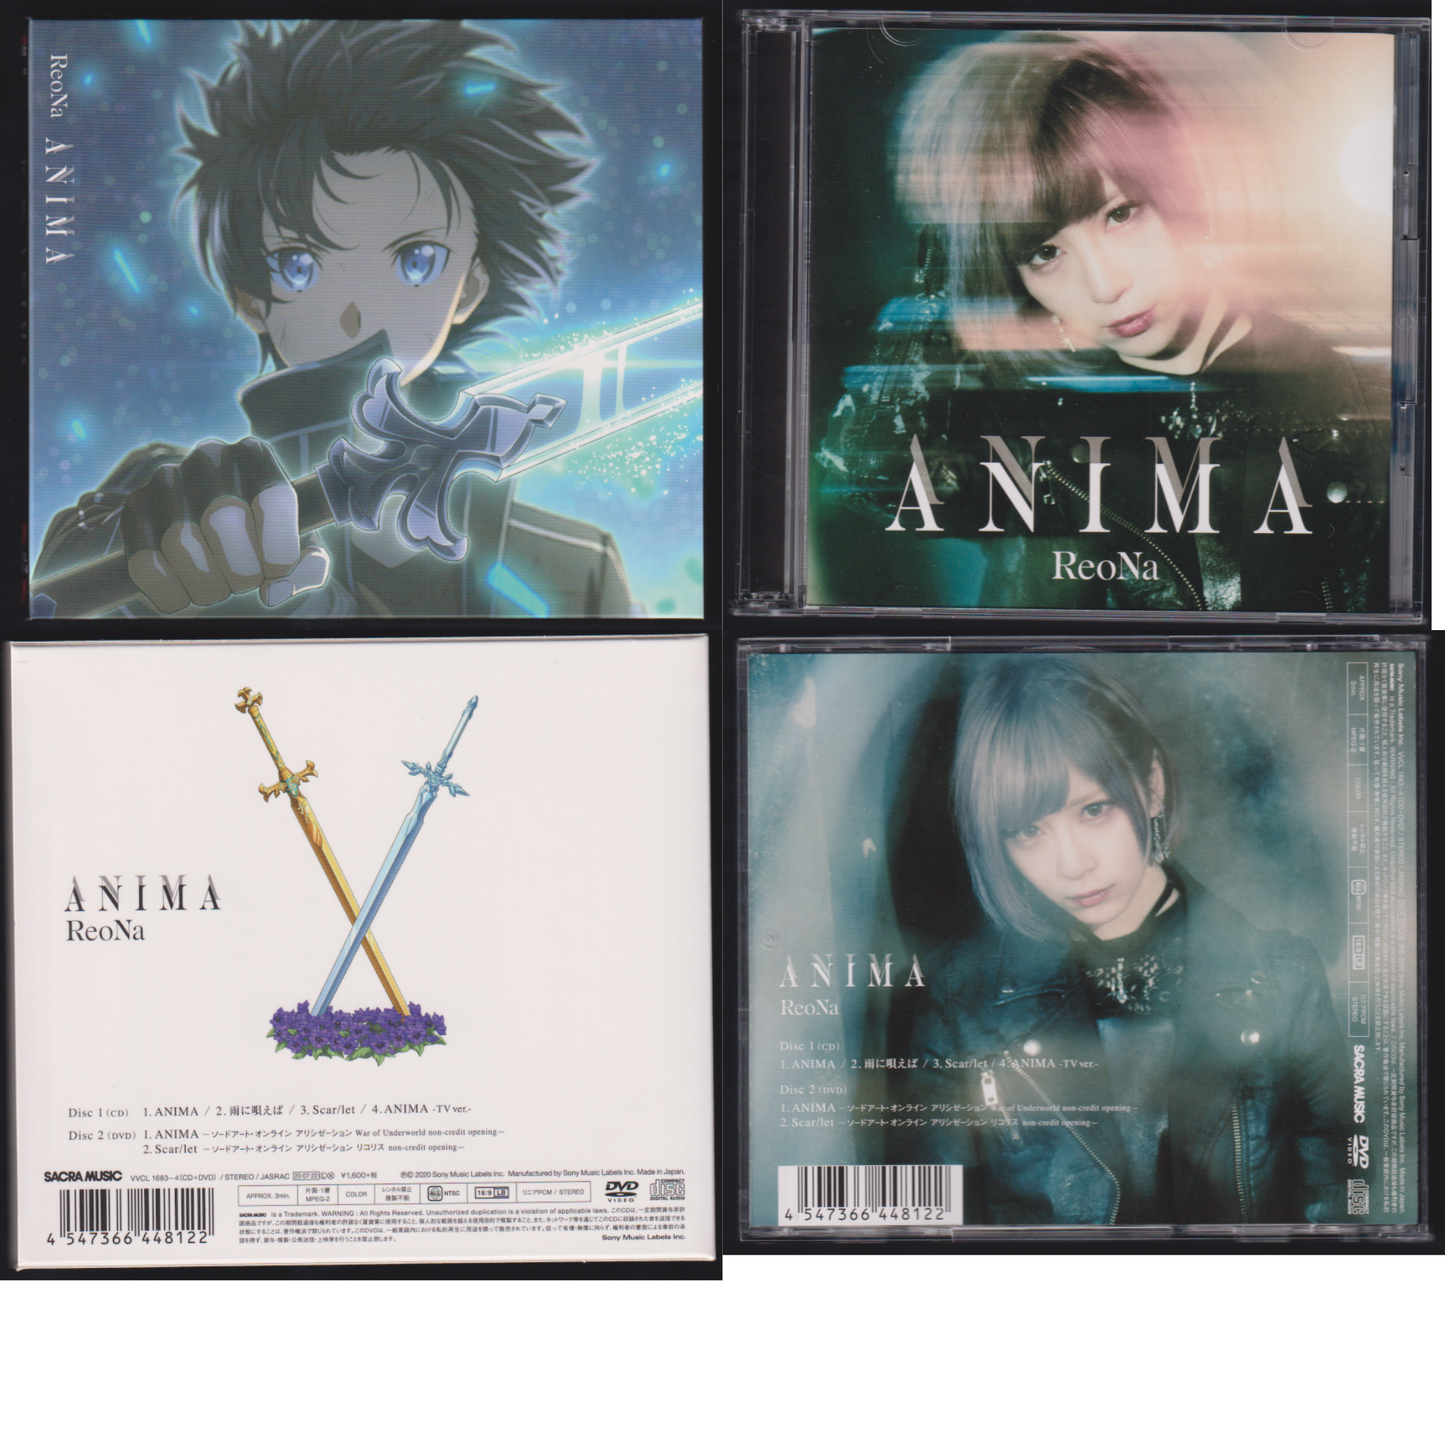 Sword Art Online - ReoNA / ANIMA CD (Limited Edition)